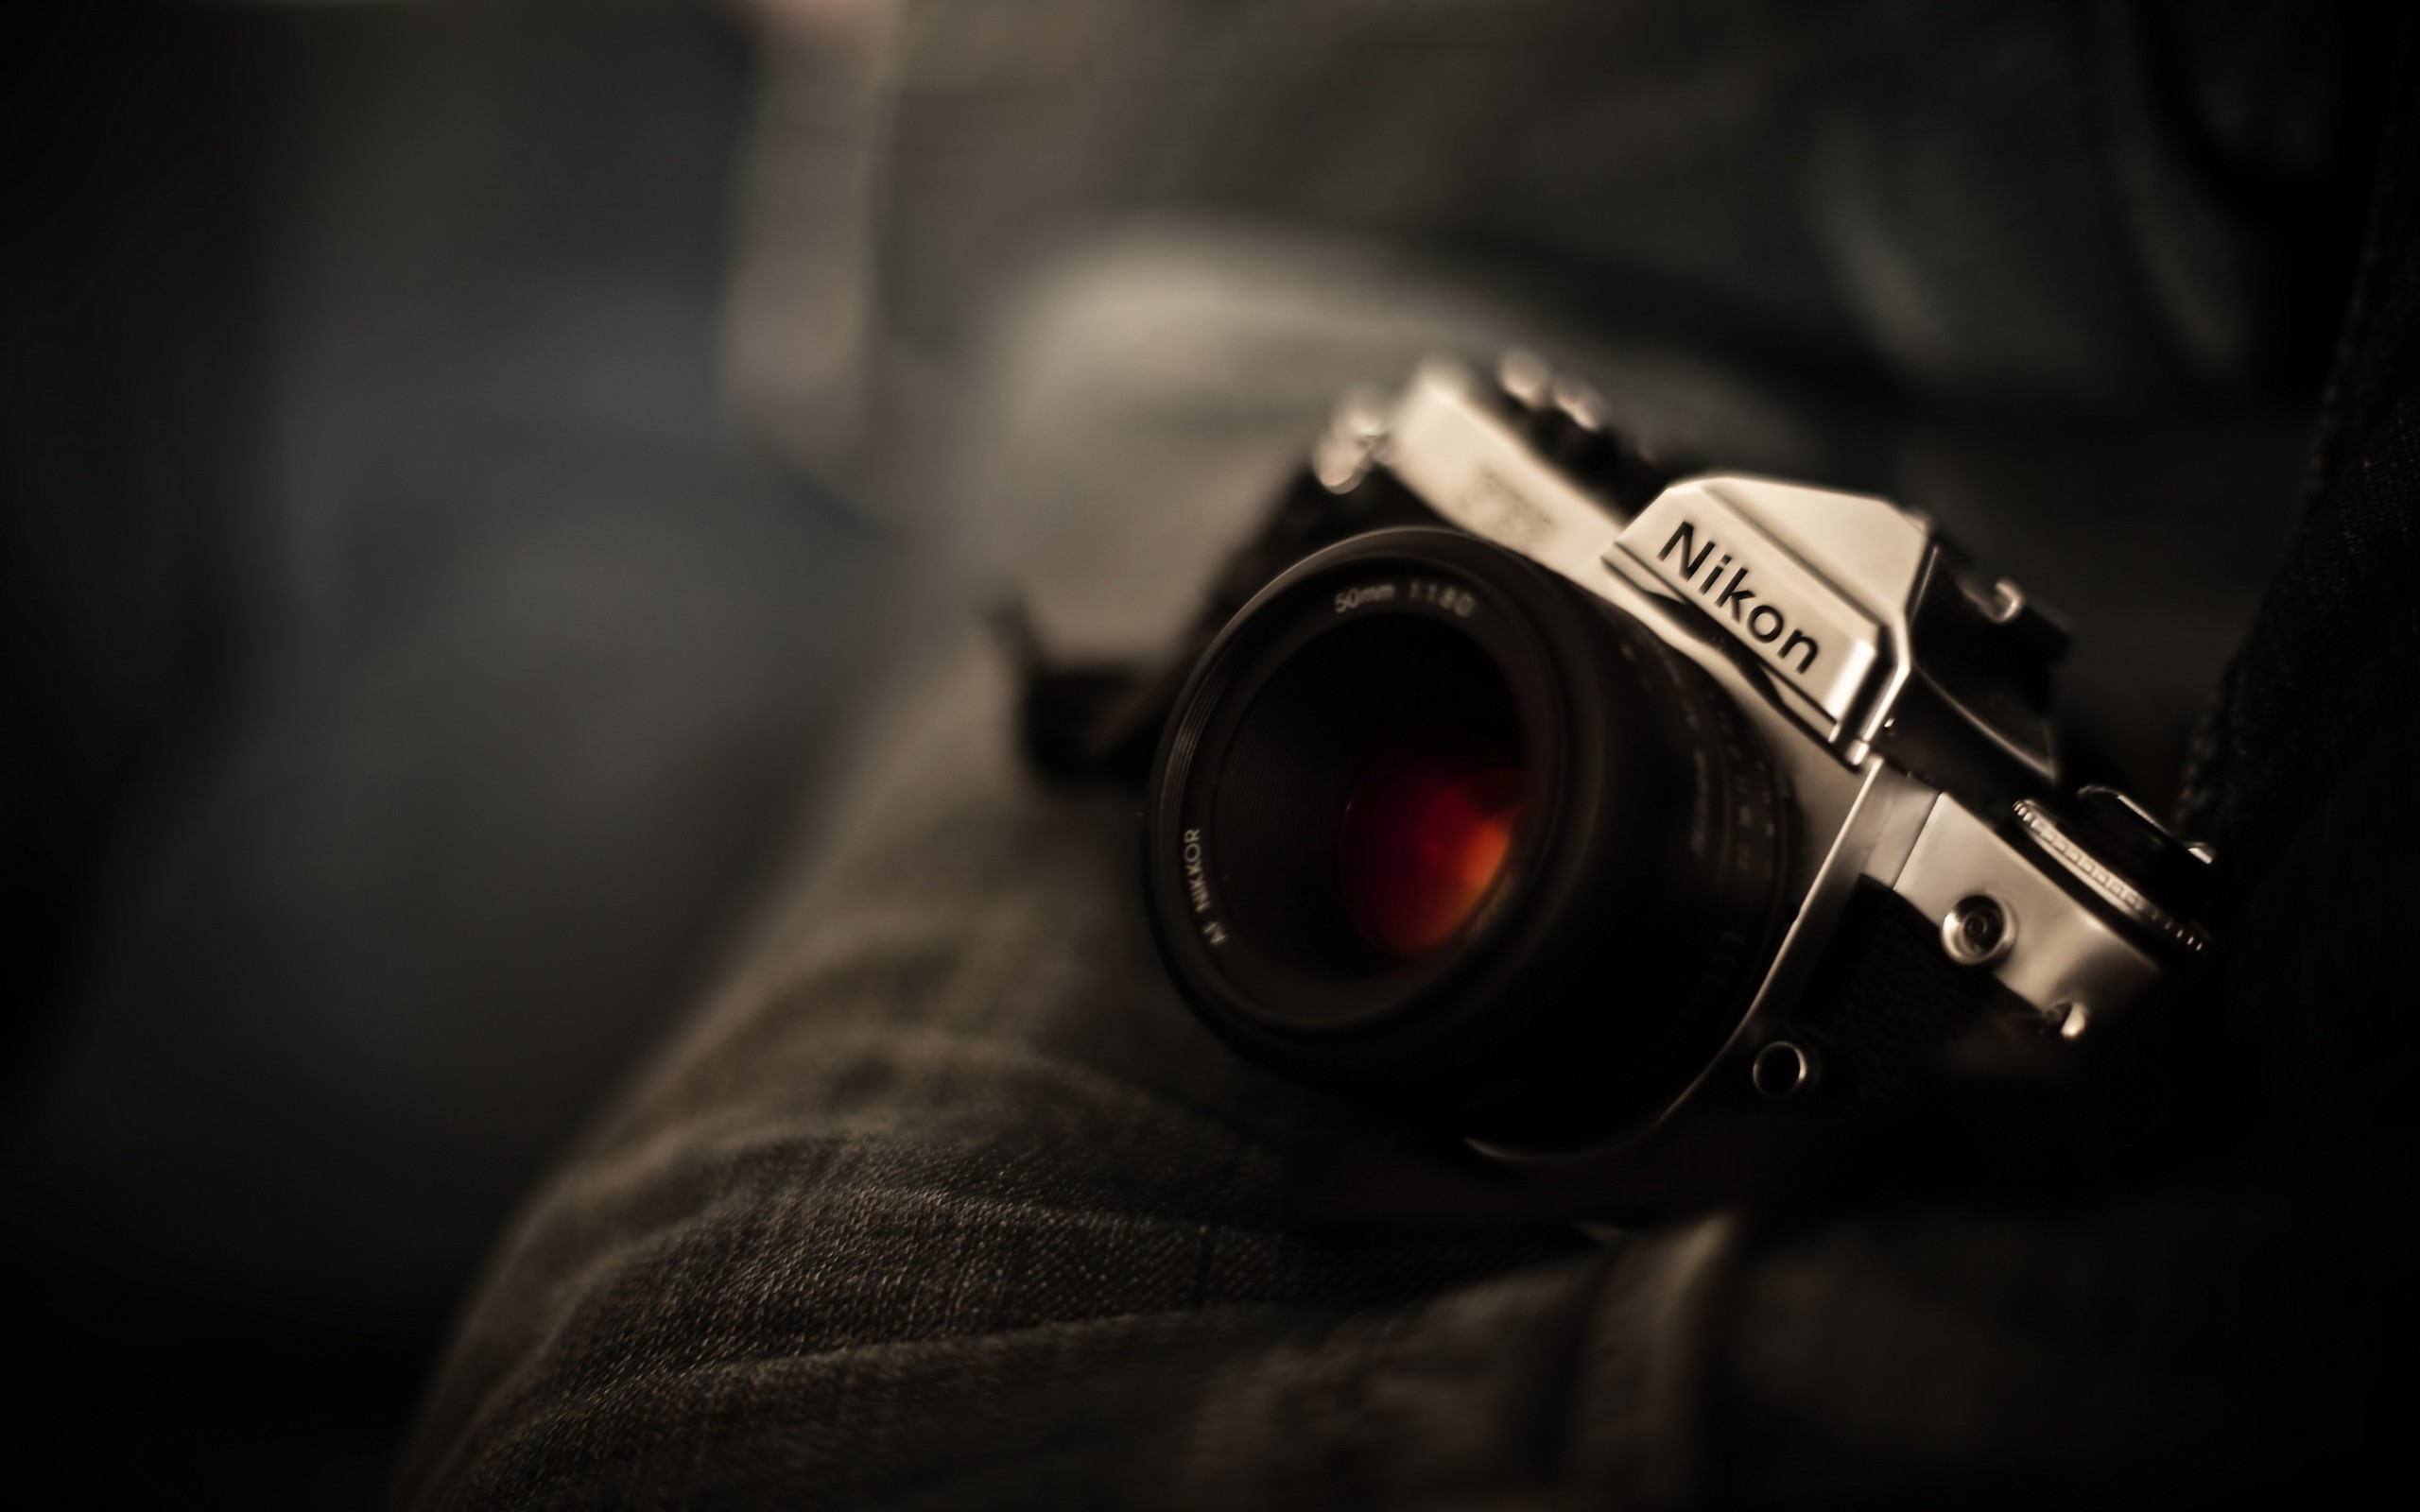 General 2560x1600 Nikon photography camera depth of field macro blurred indoors technology